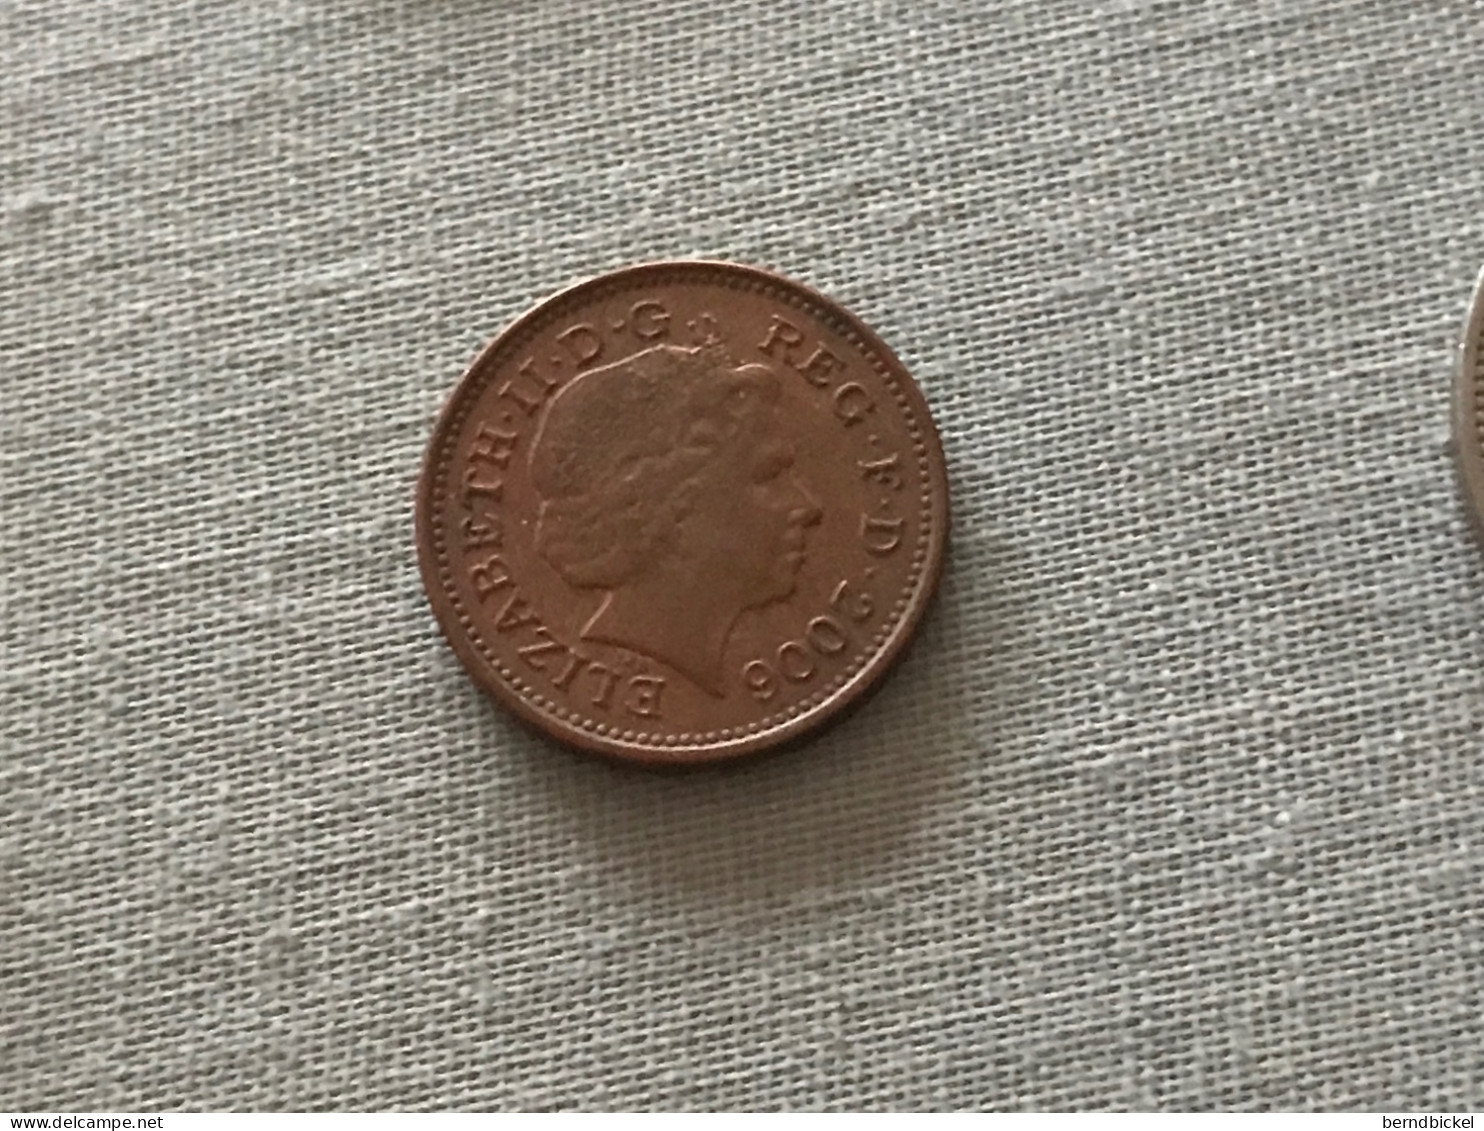 Münzen Münze Umlaufmünze Großbritannien 1 Pence 2006 - 1 Penny & 1 New Penny